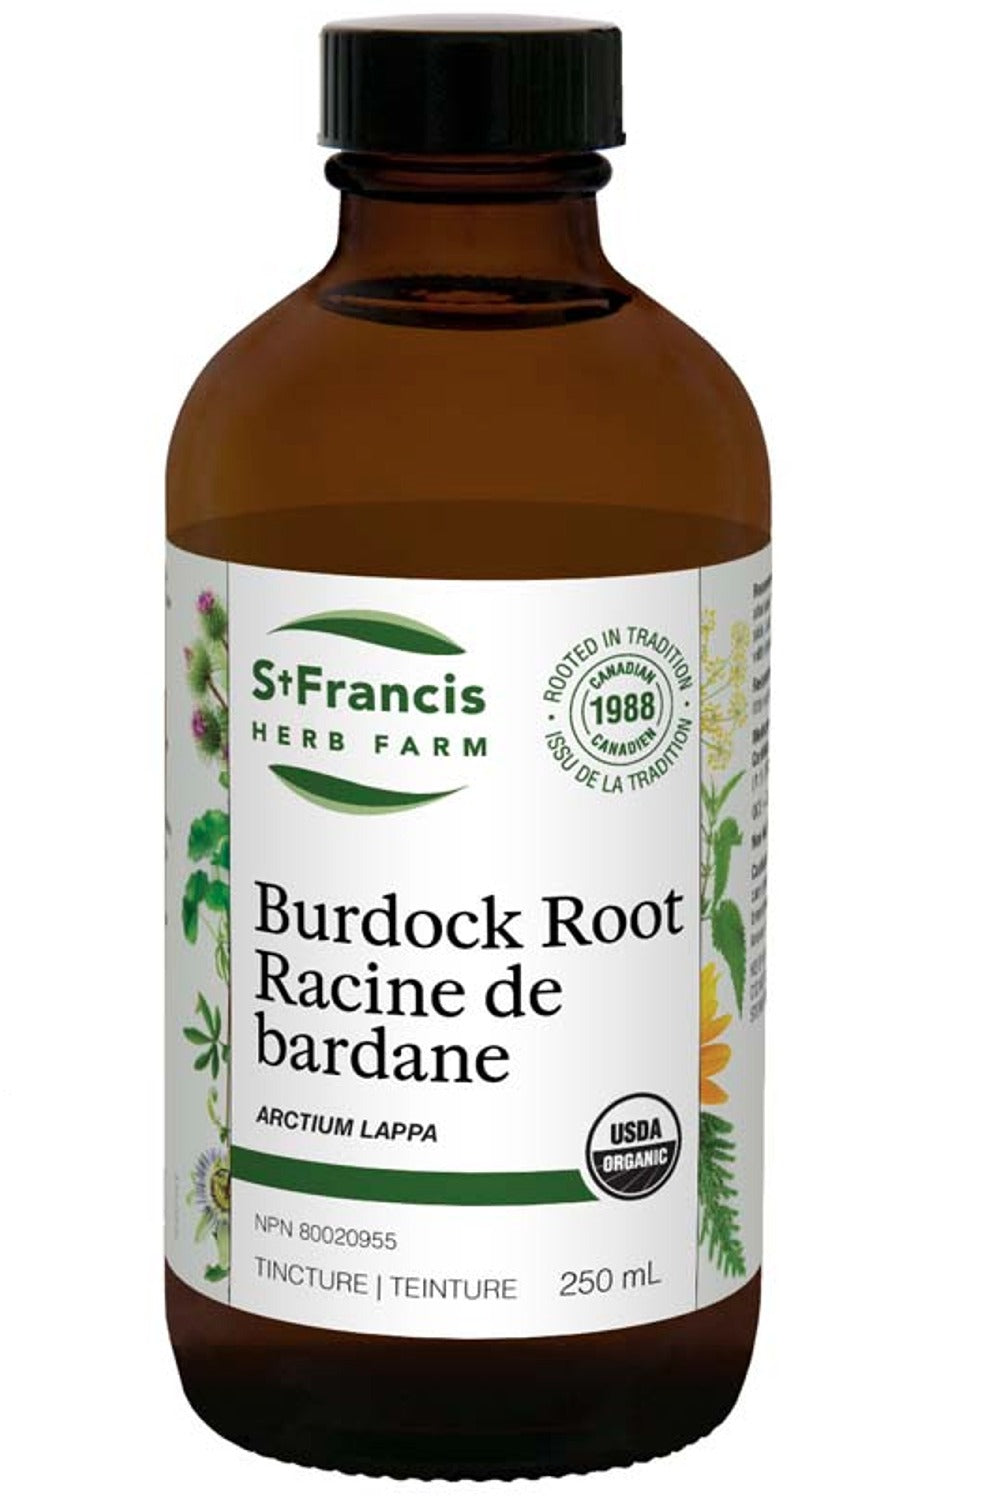 ST FRANCIS HERB FARM Burdock Root (250 ml)